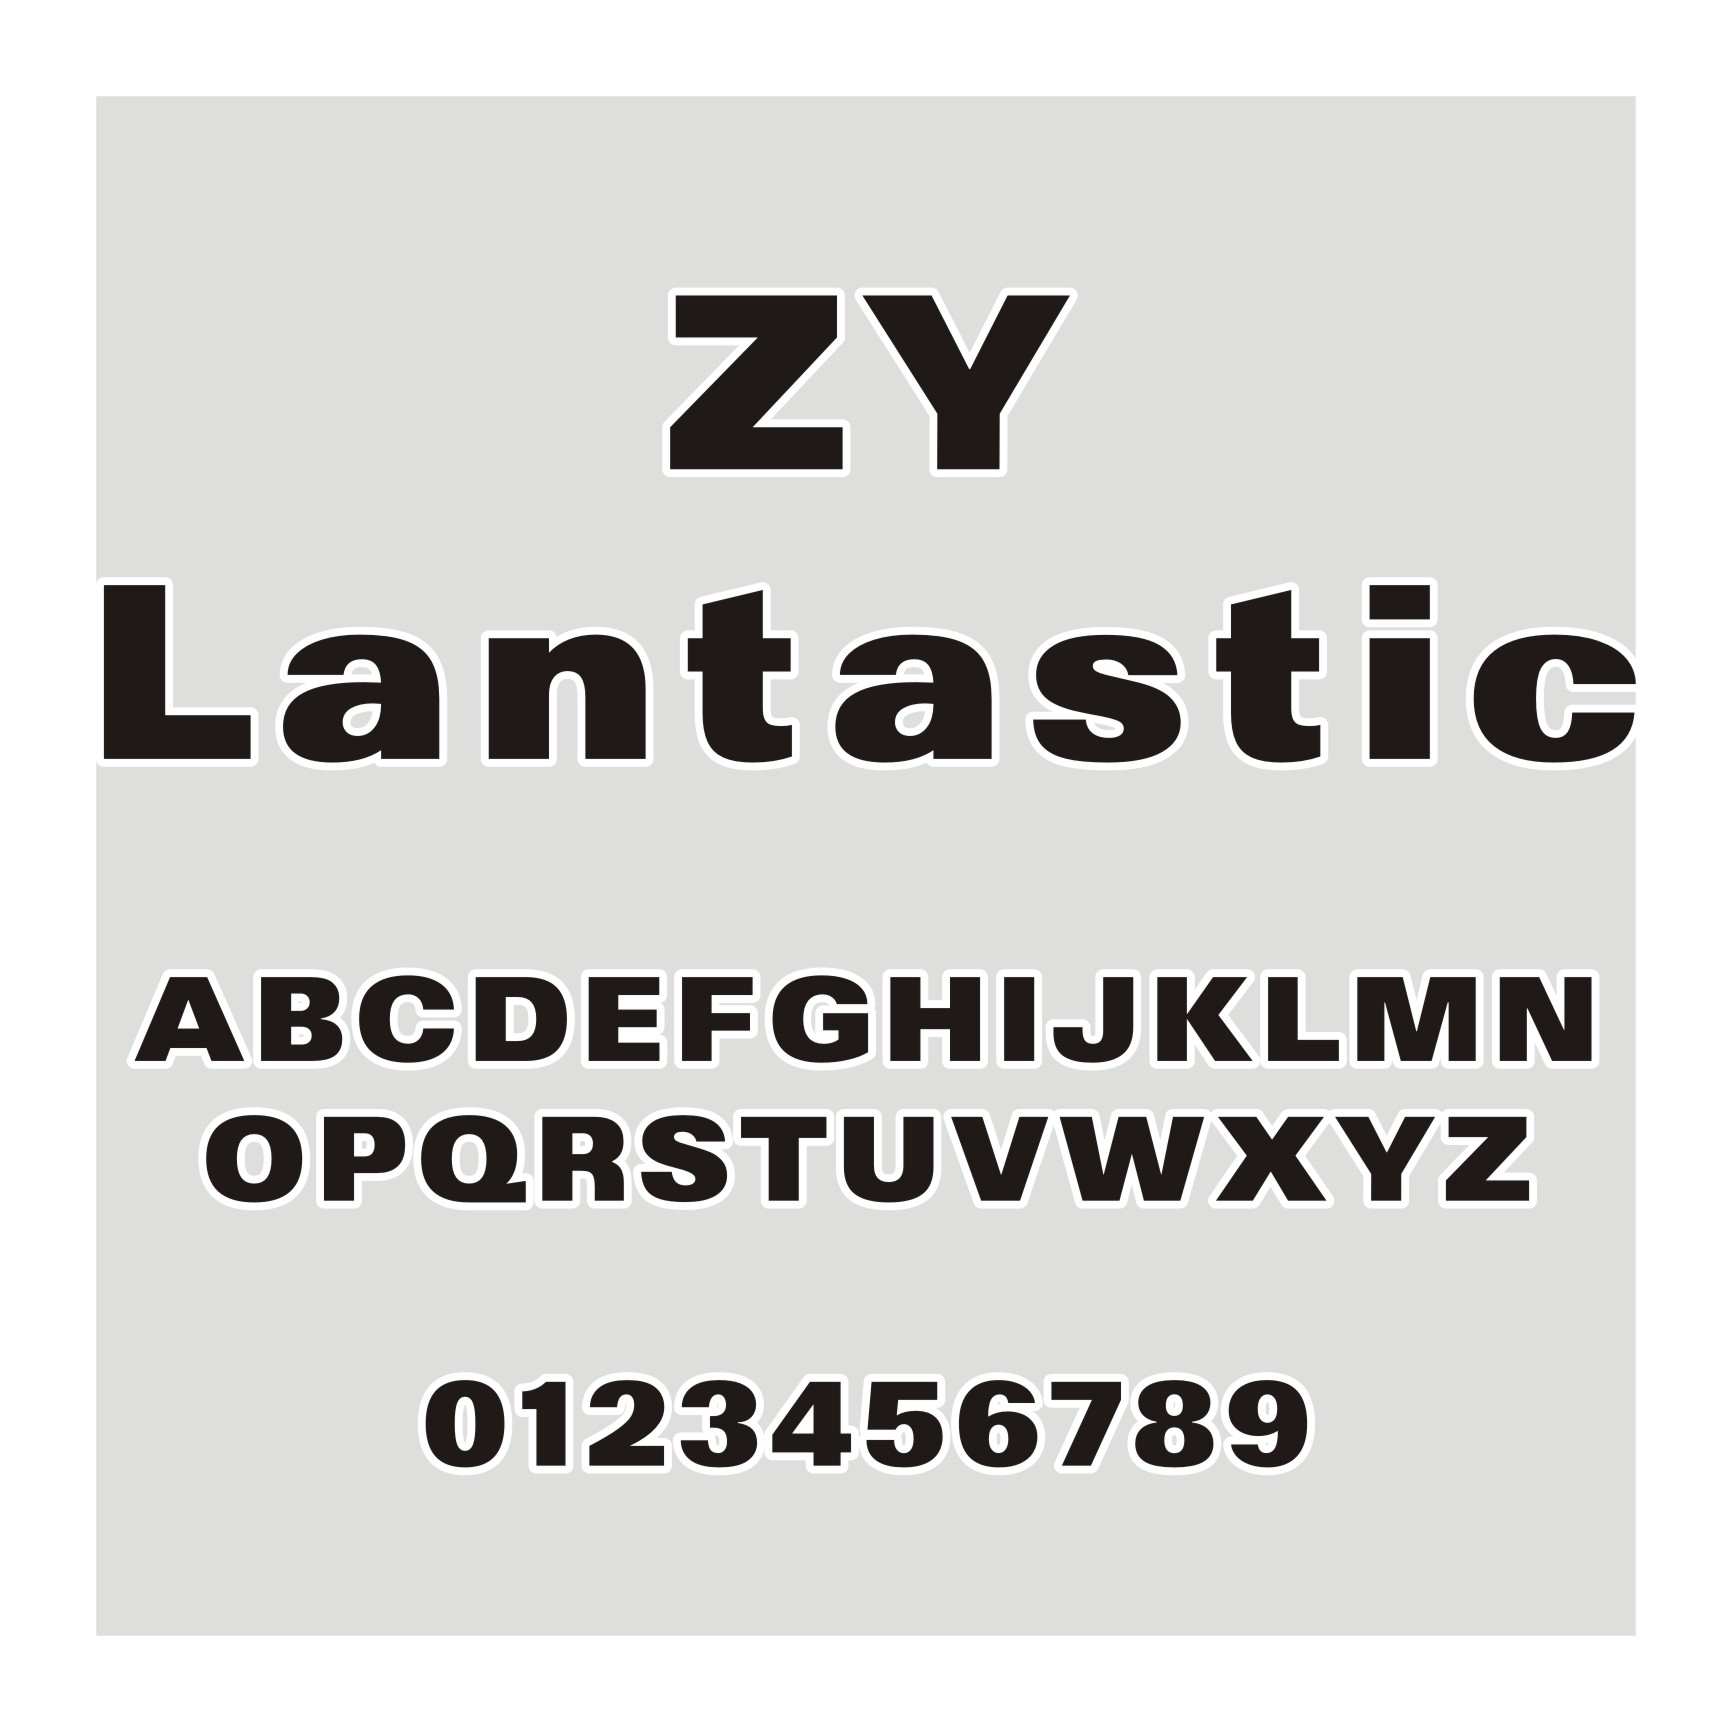 ZY Lantastic